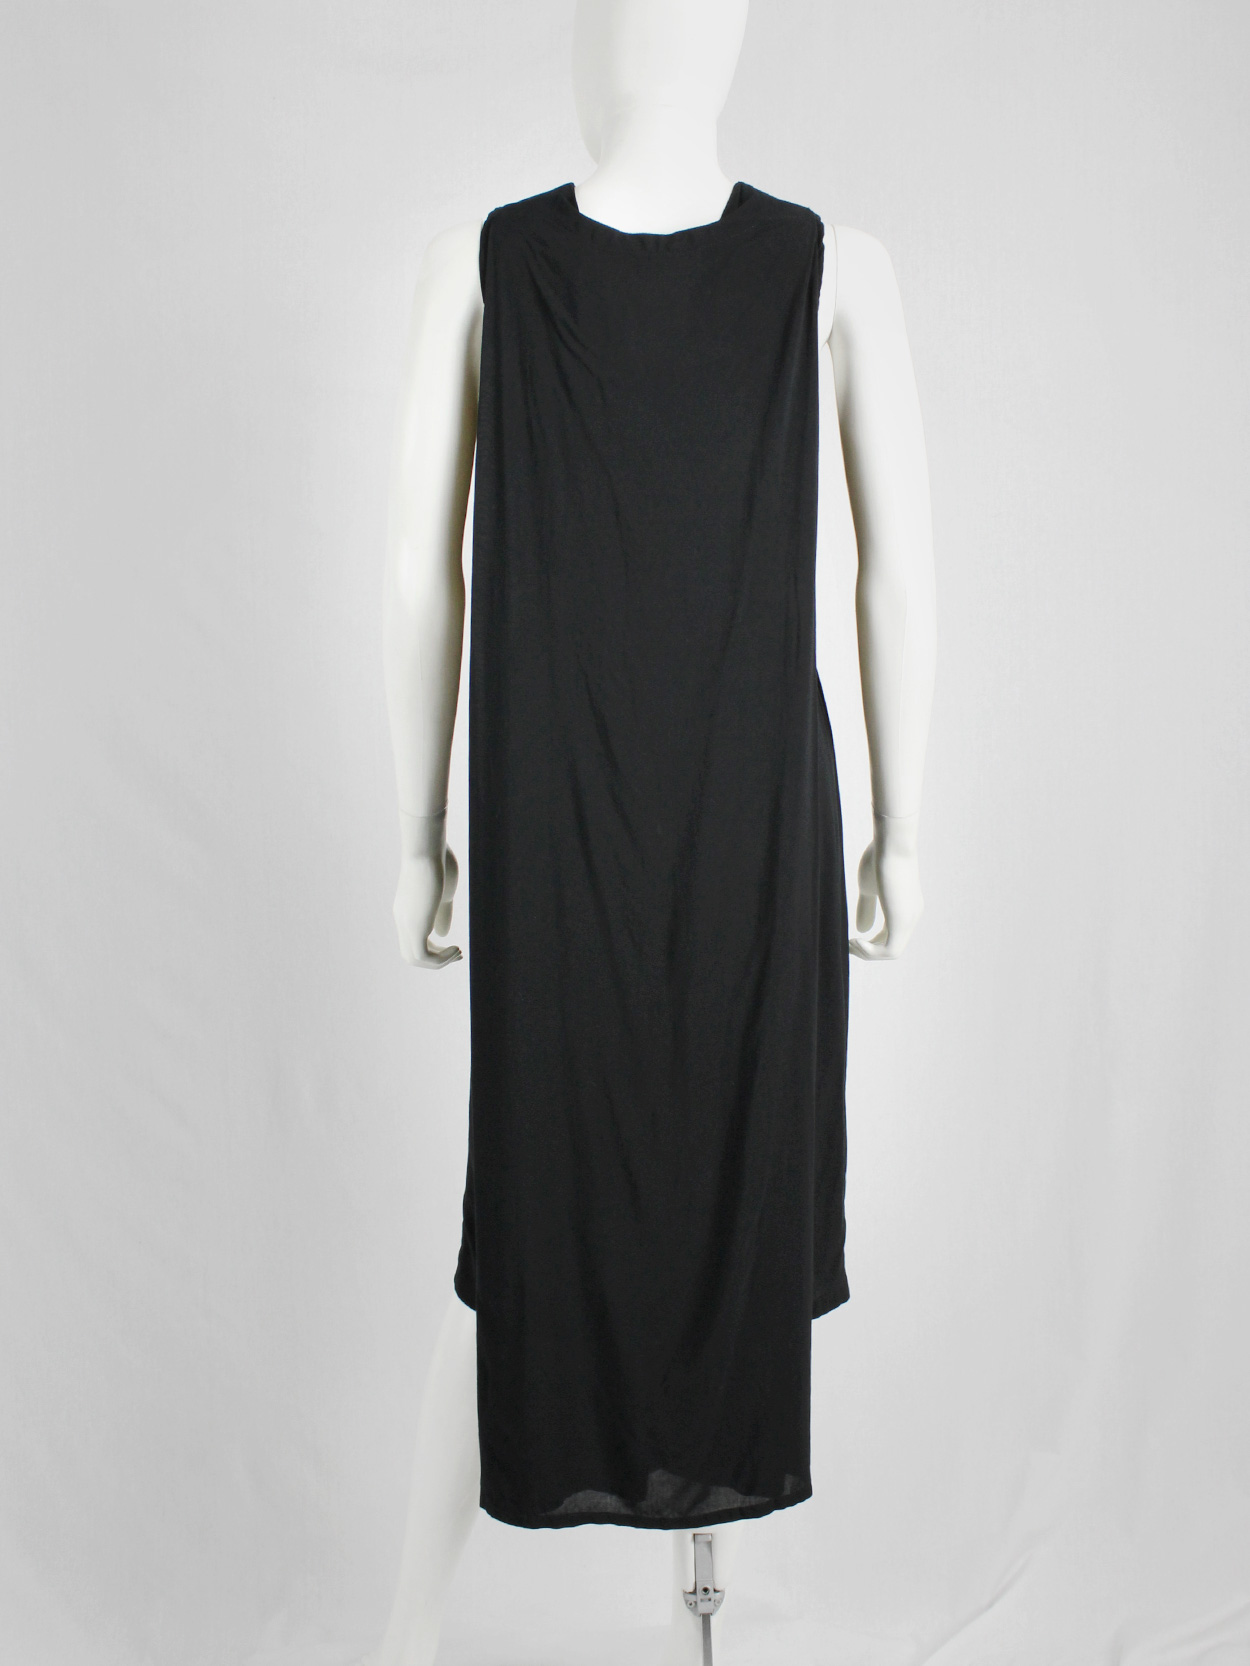 vaniitas Ann Demeulemeester black dress with cape — spring 2013 6188